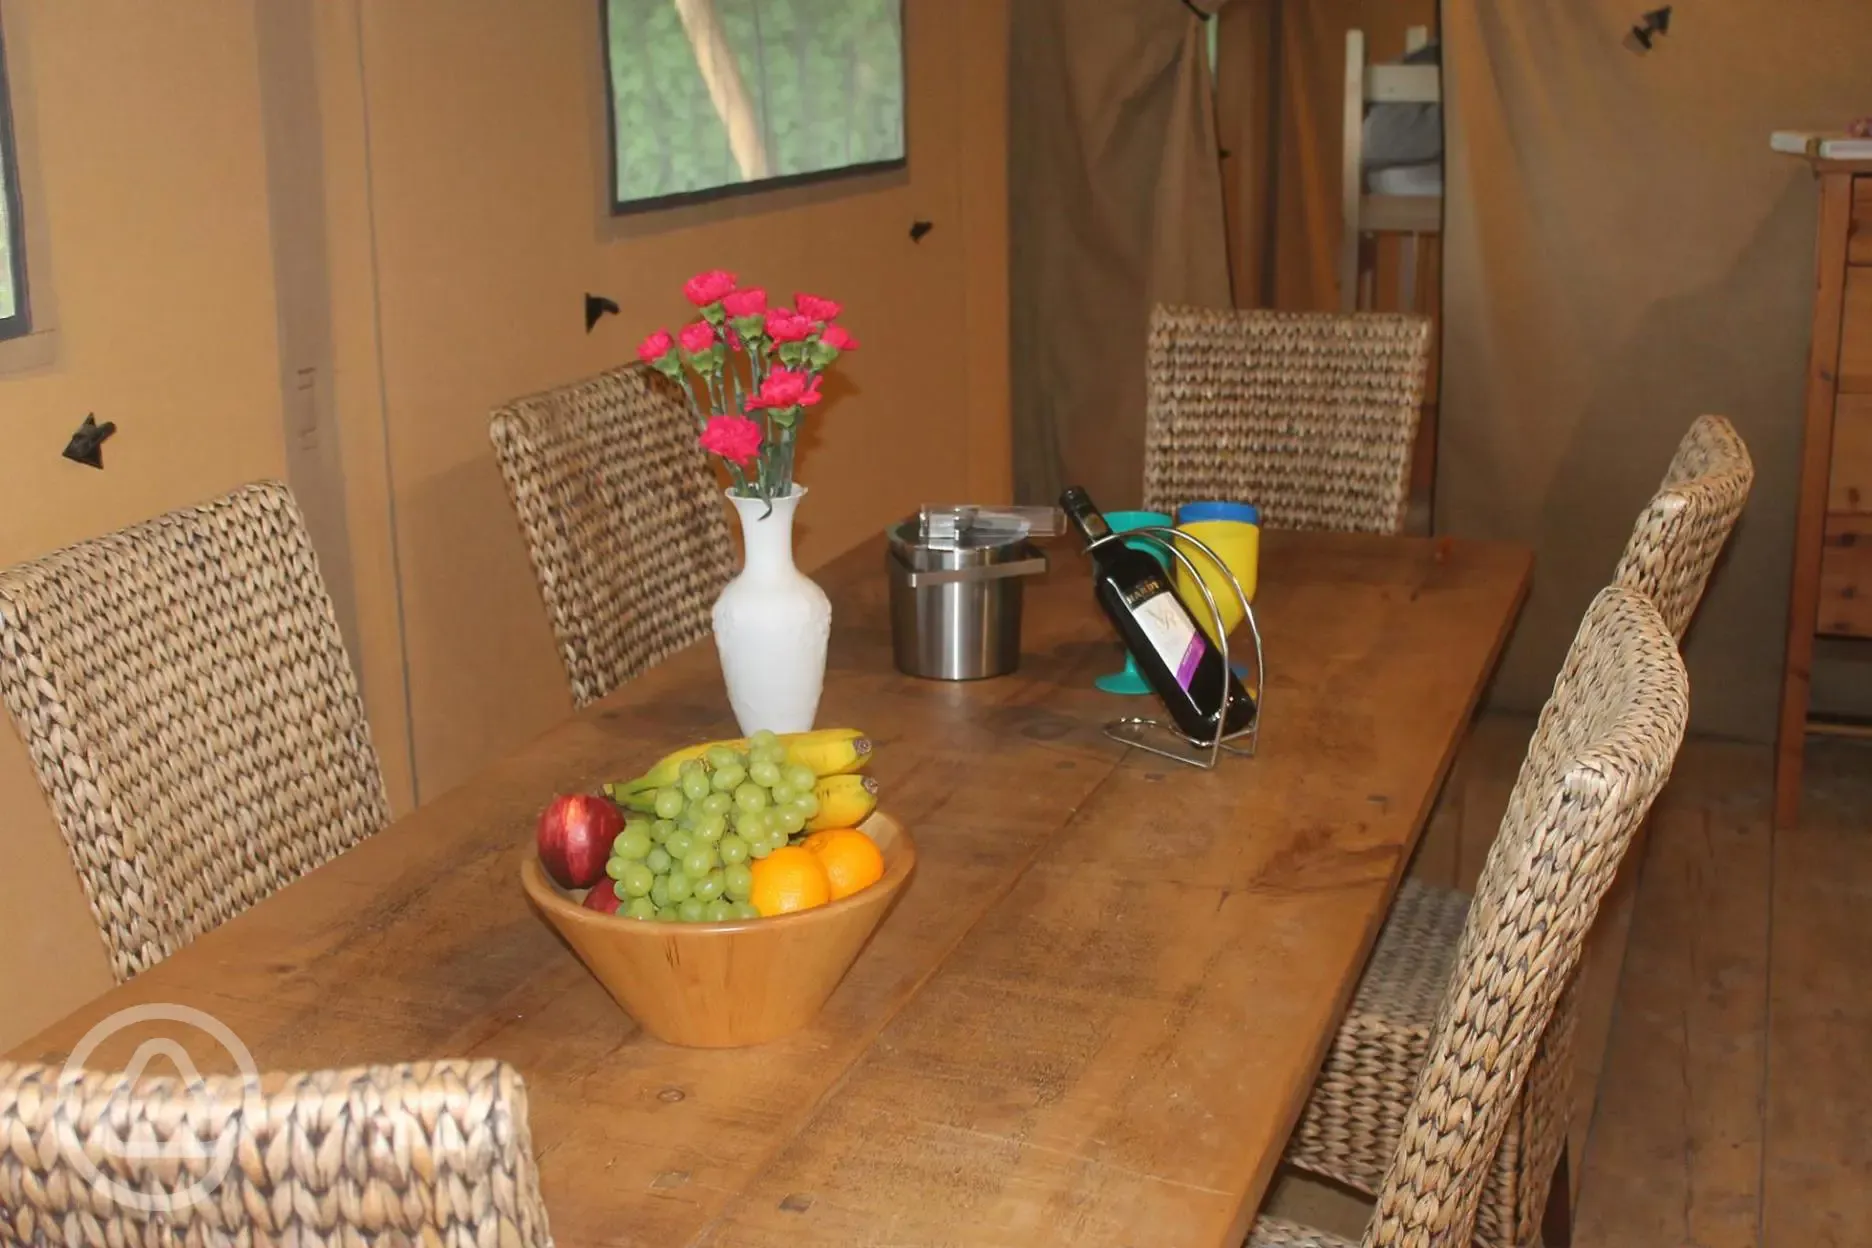 Safari tent dining table